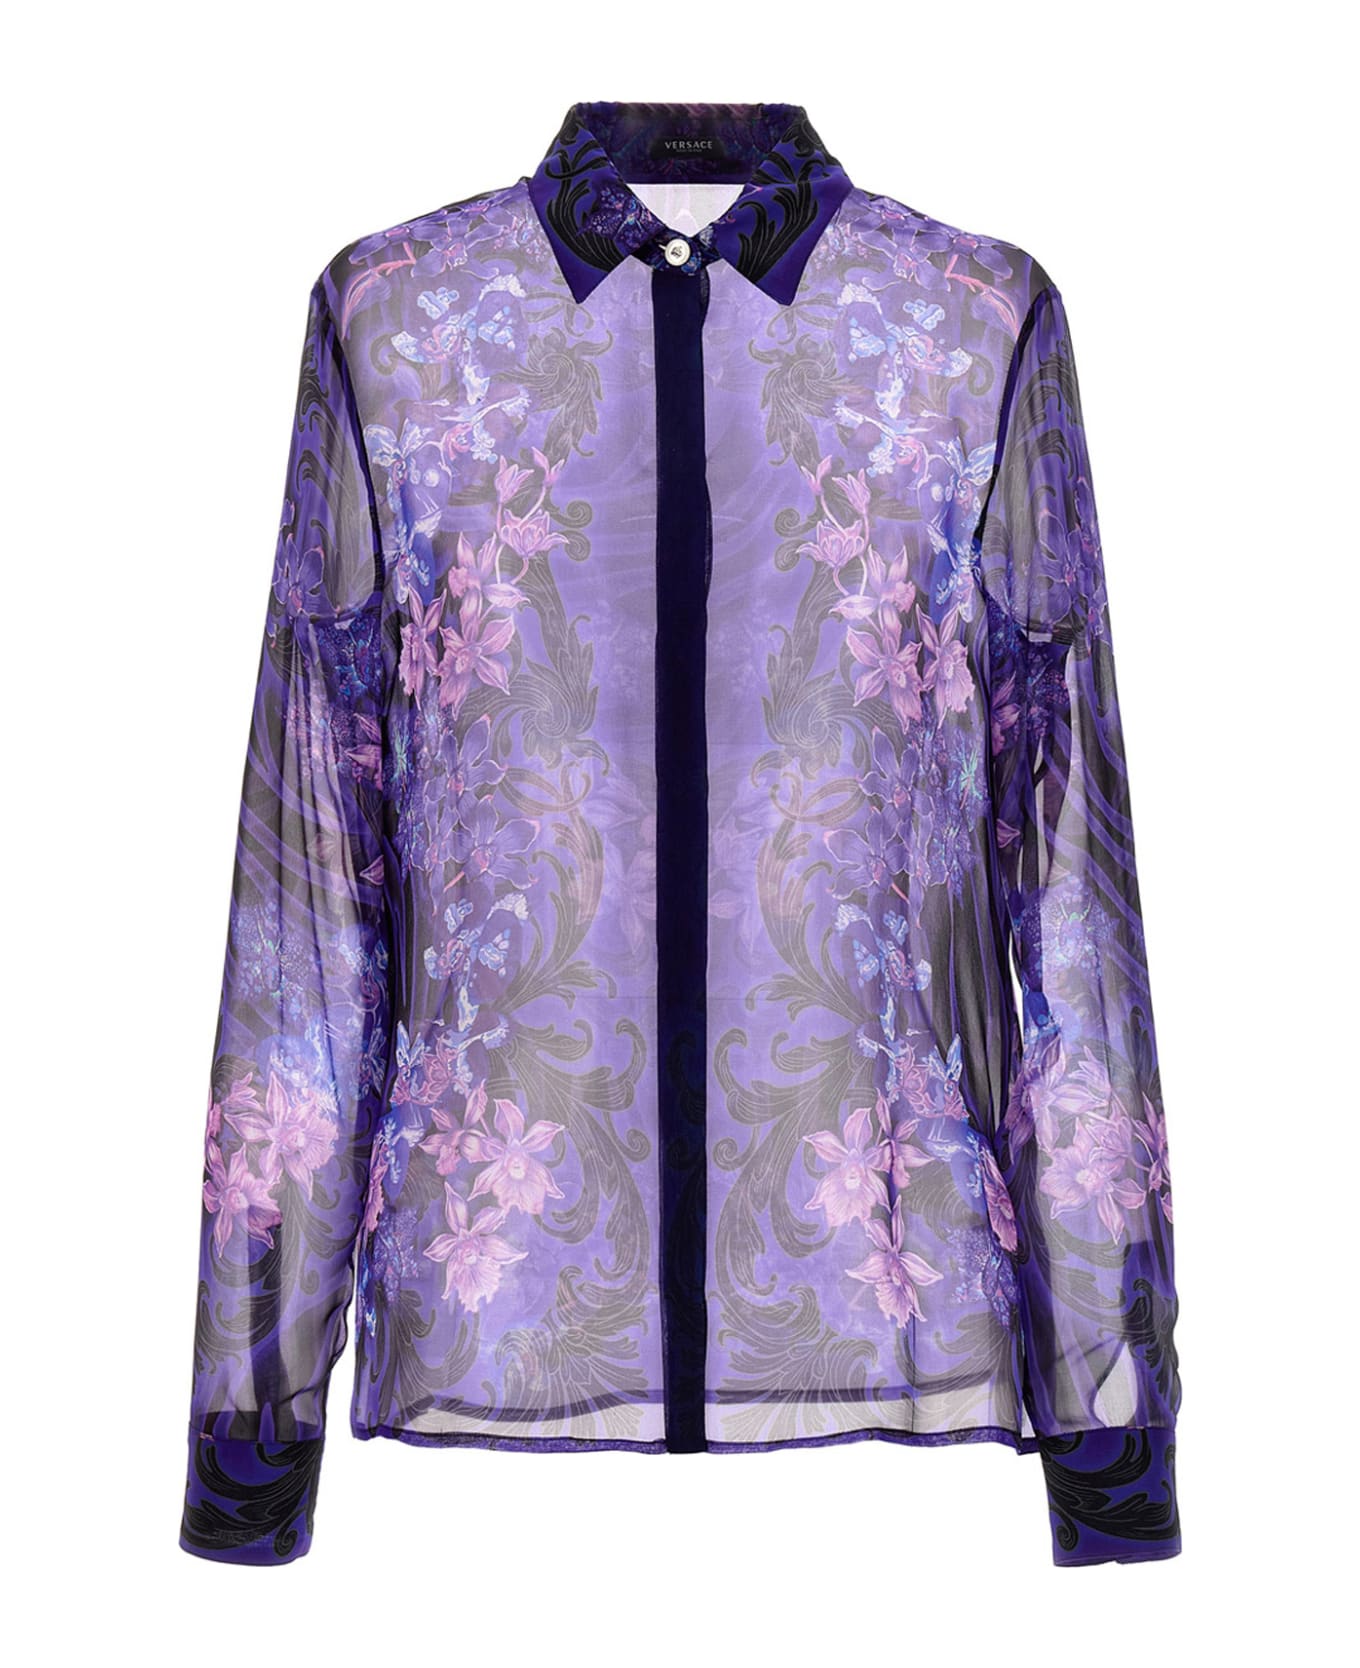 Versace 'barocco', 'barocco'shirt - Purple シャツ